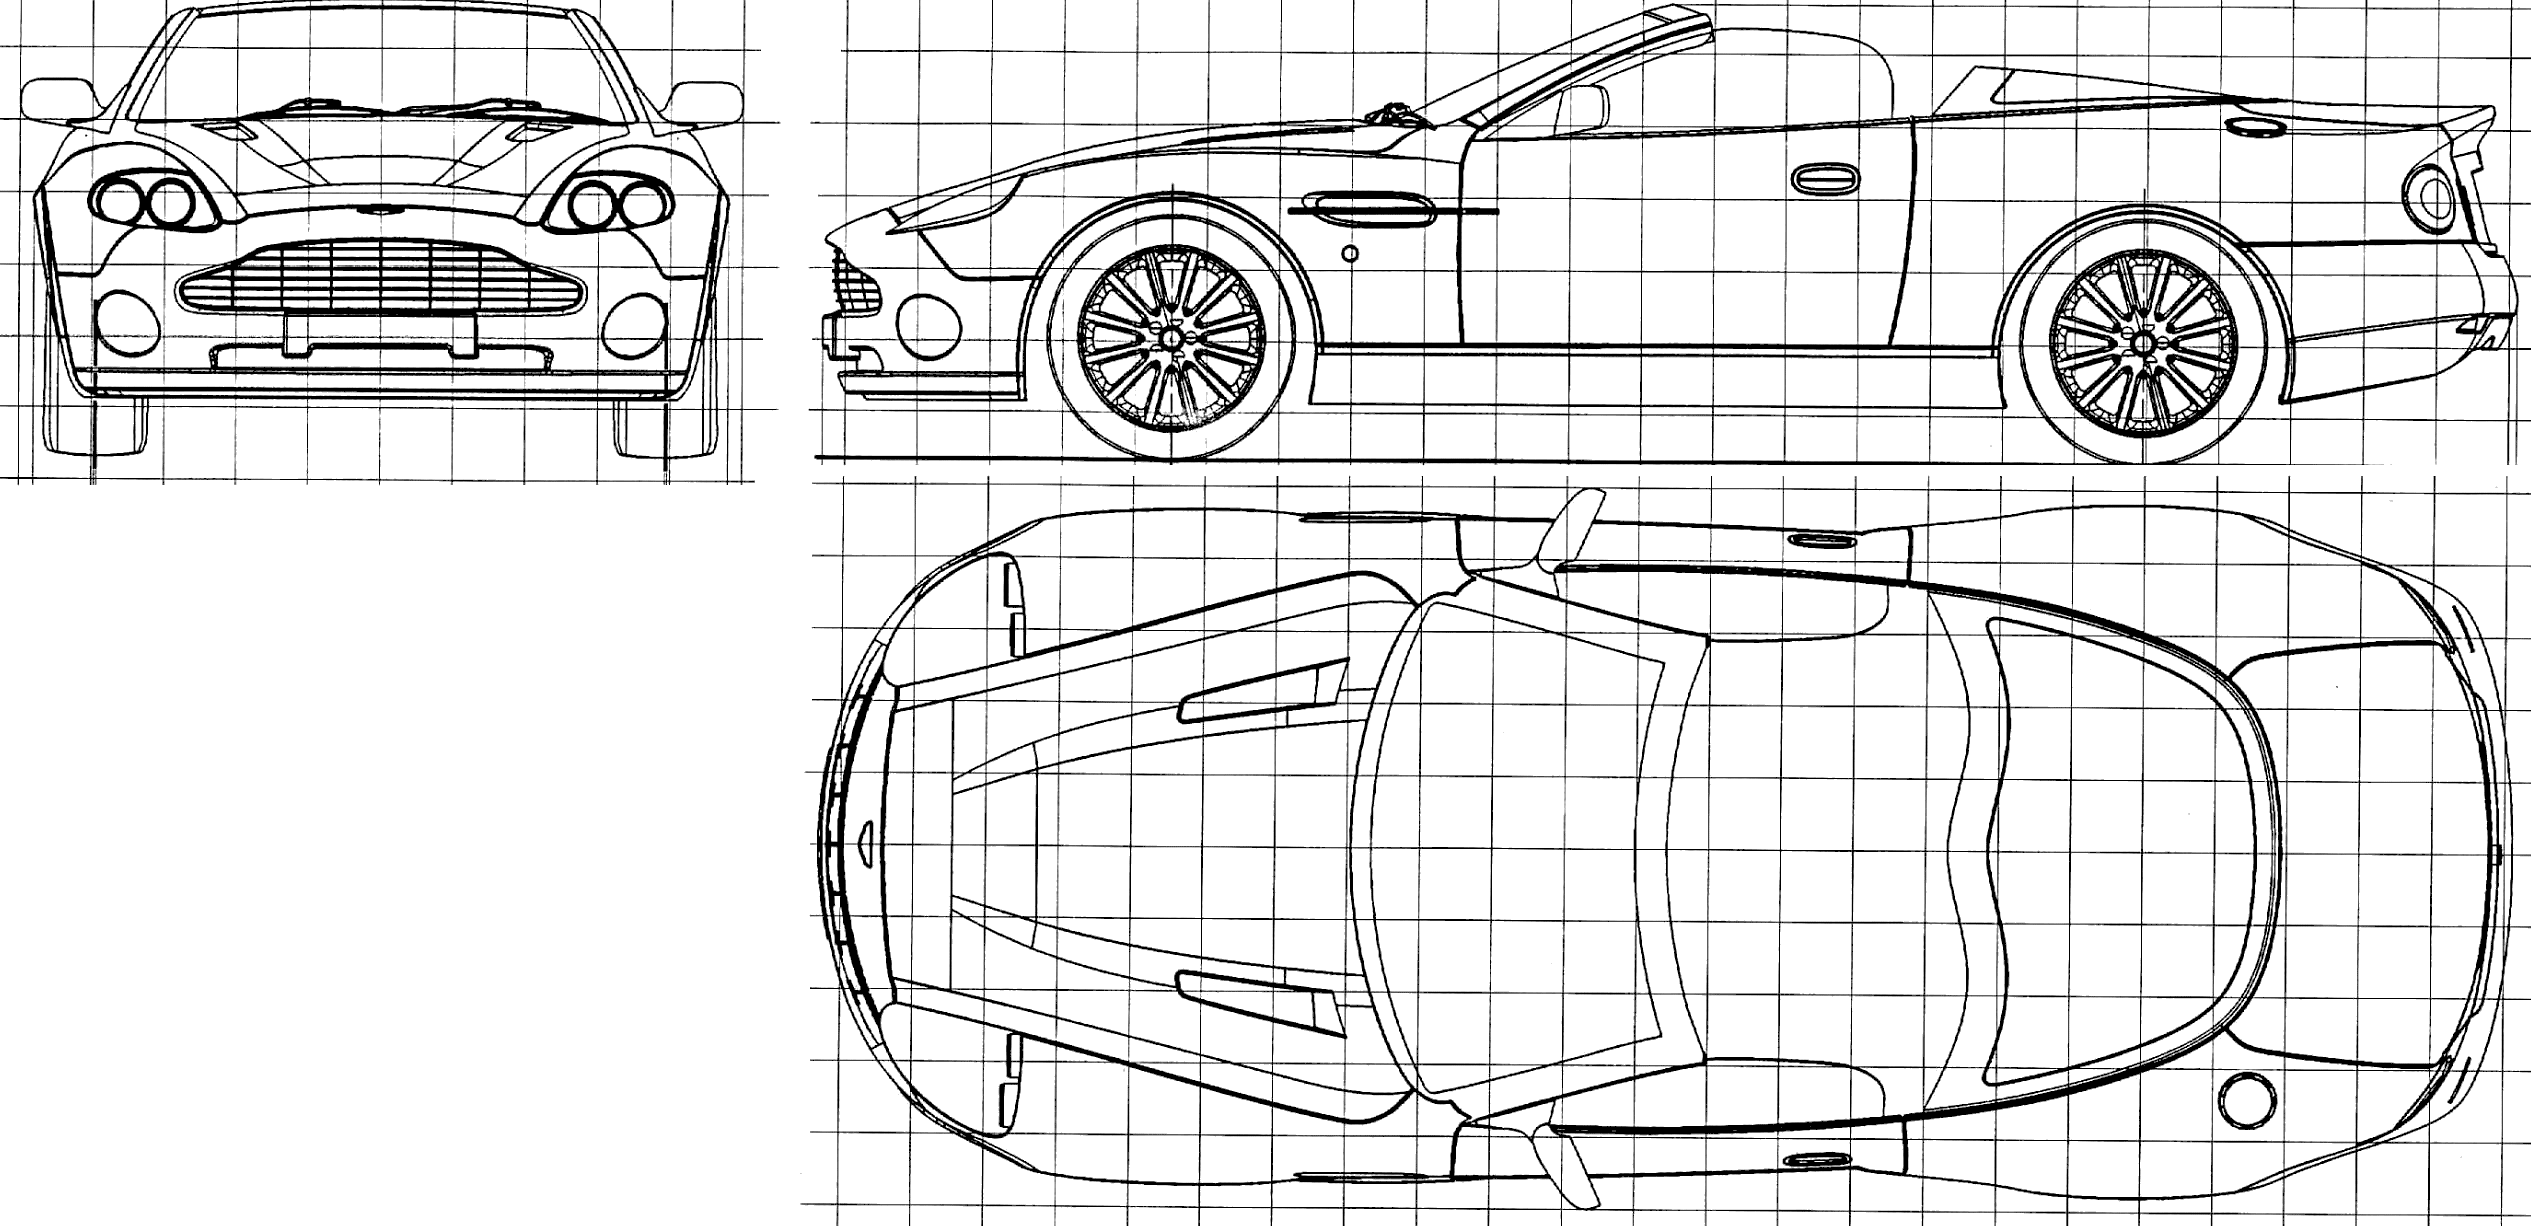 Aston Martin DB7 Zagato Convertible blueprints